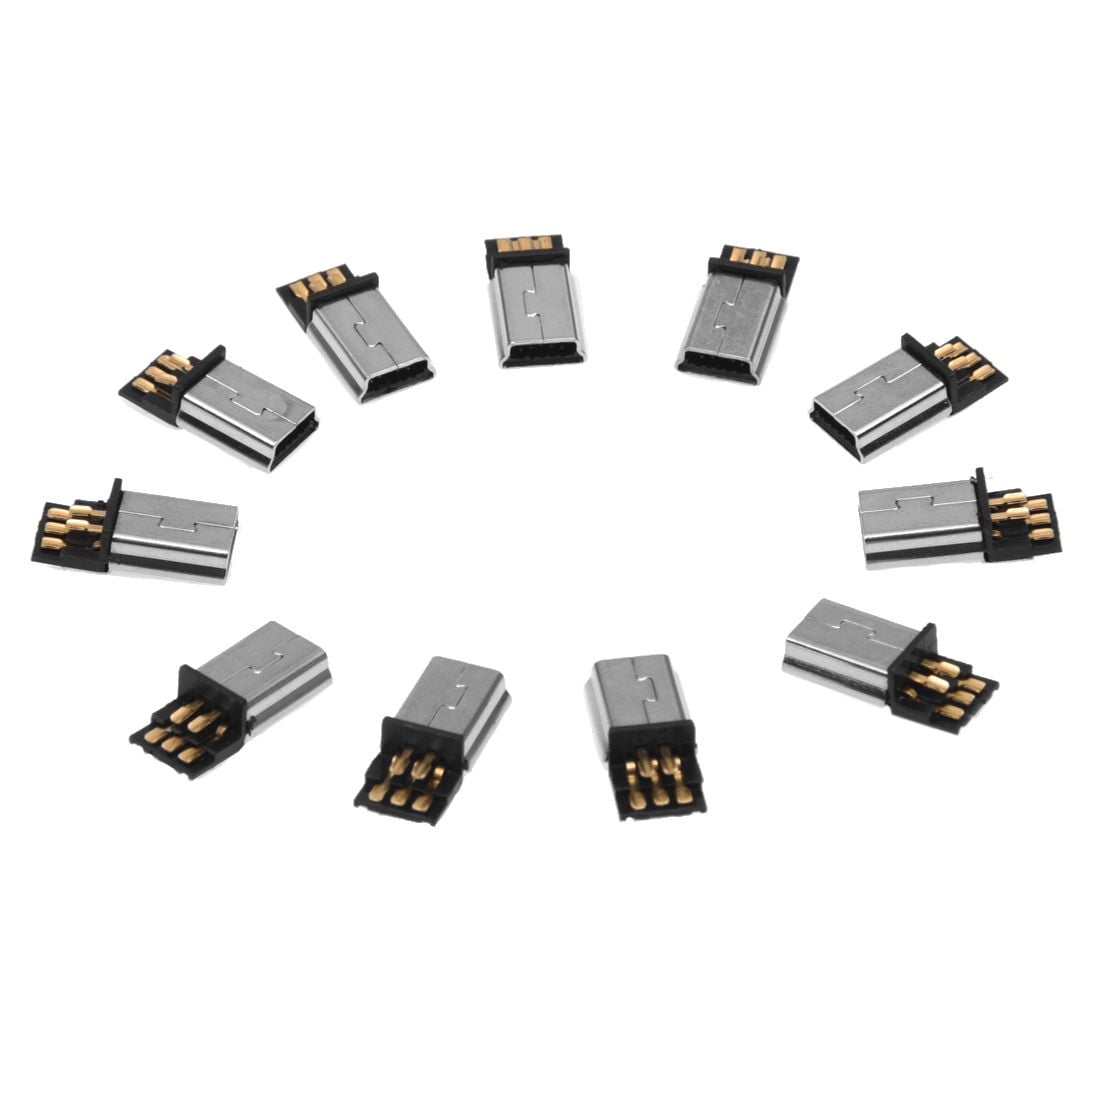 10 sets Metal Shell Housing Mini 5pin USB Male Plug Socket Connector for PC Use 